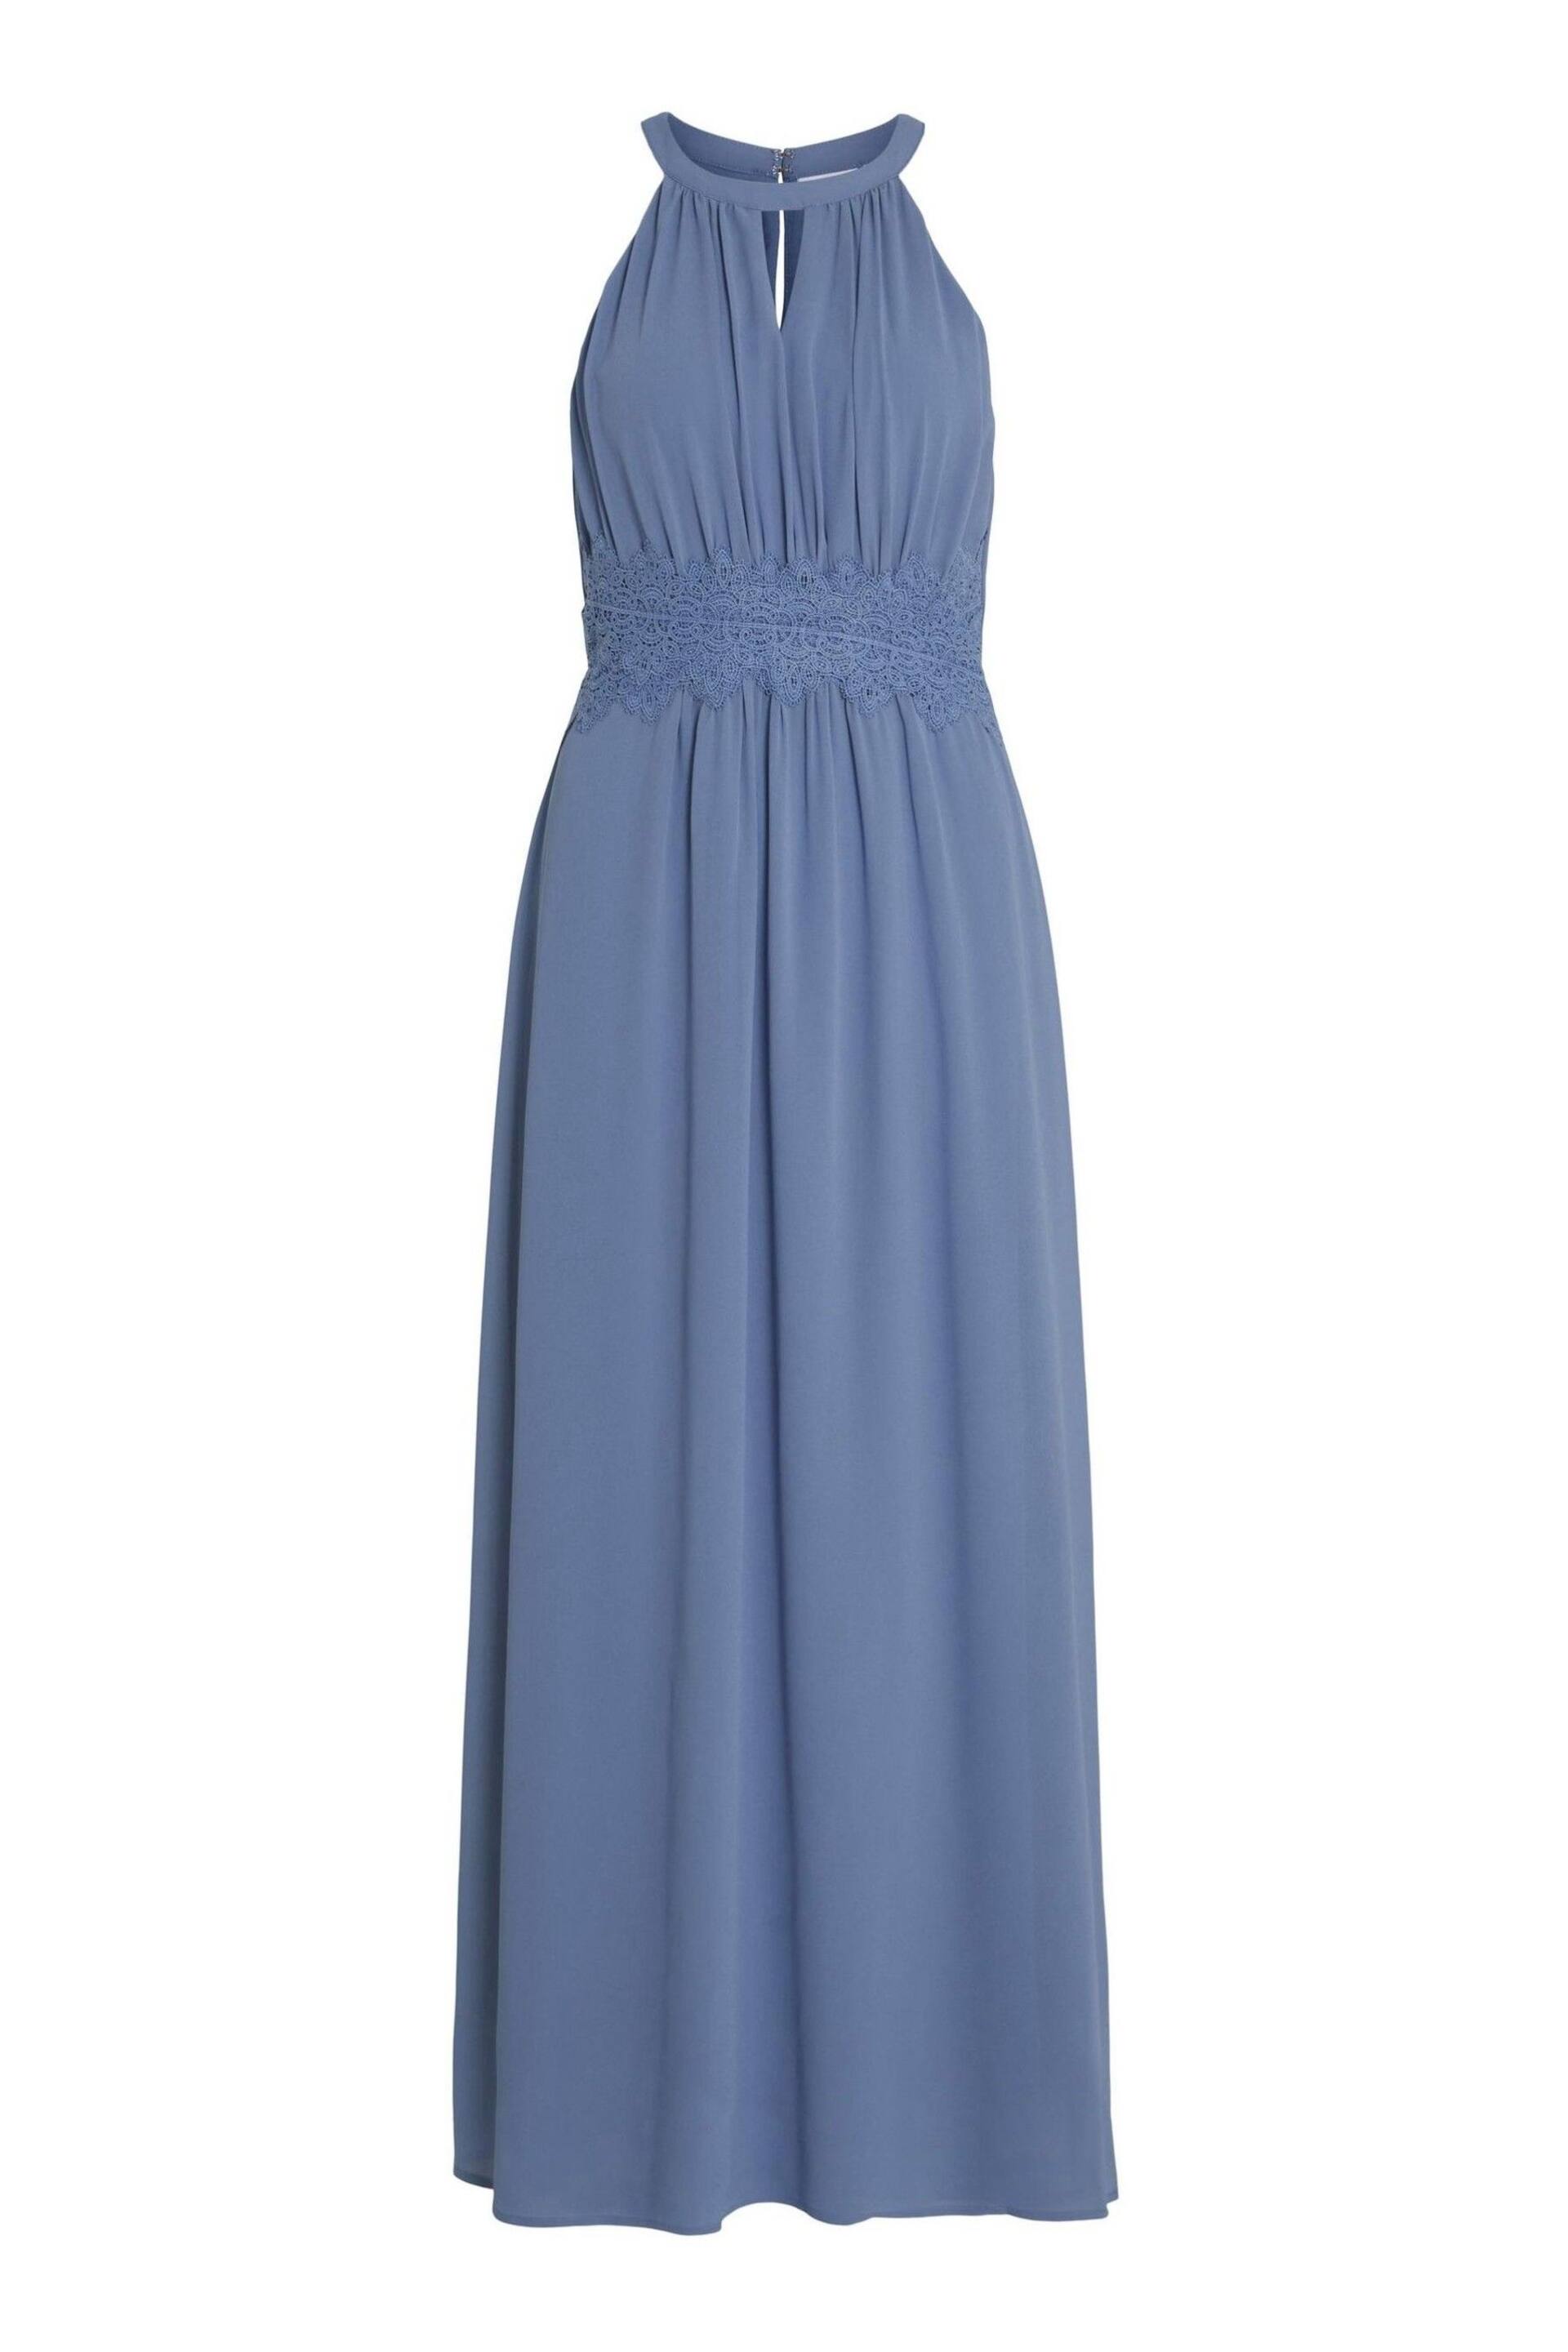 VILA Blue Halter Neck Tulle Maxi Dress - Image 5 of 6